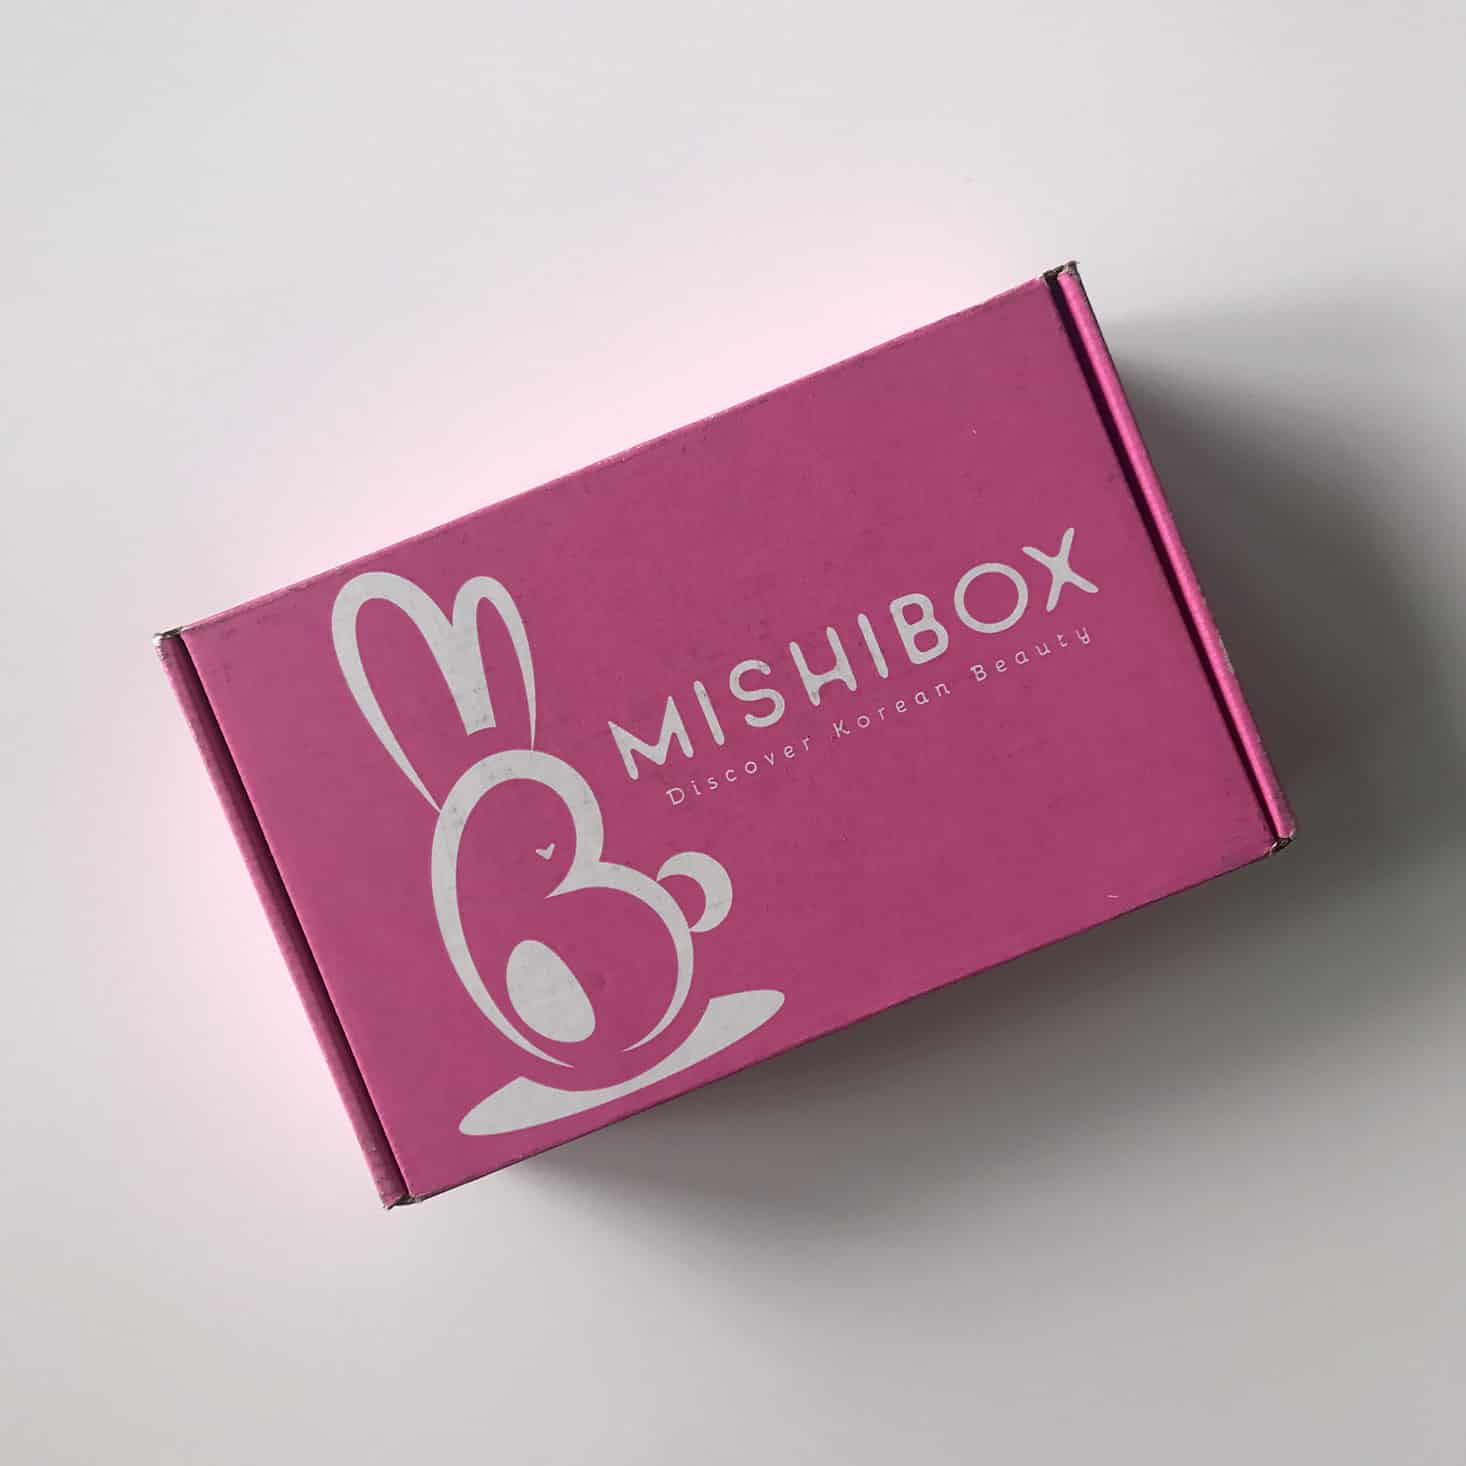 Mishibox K-Beauty Subscription Box Review – May 2017